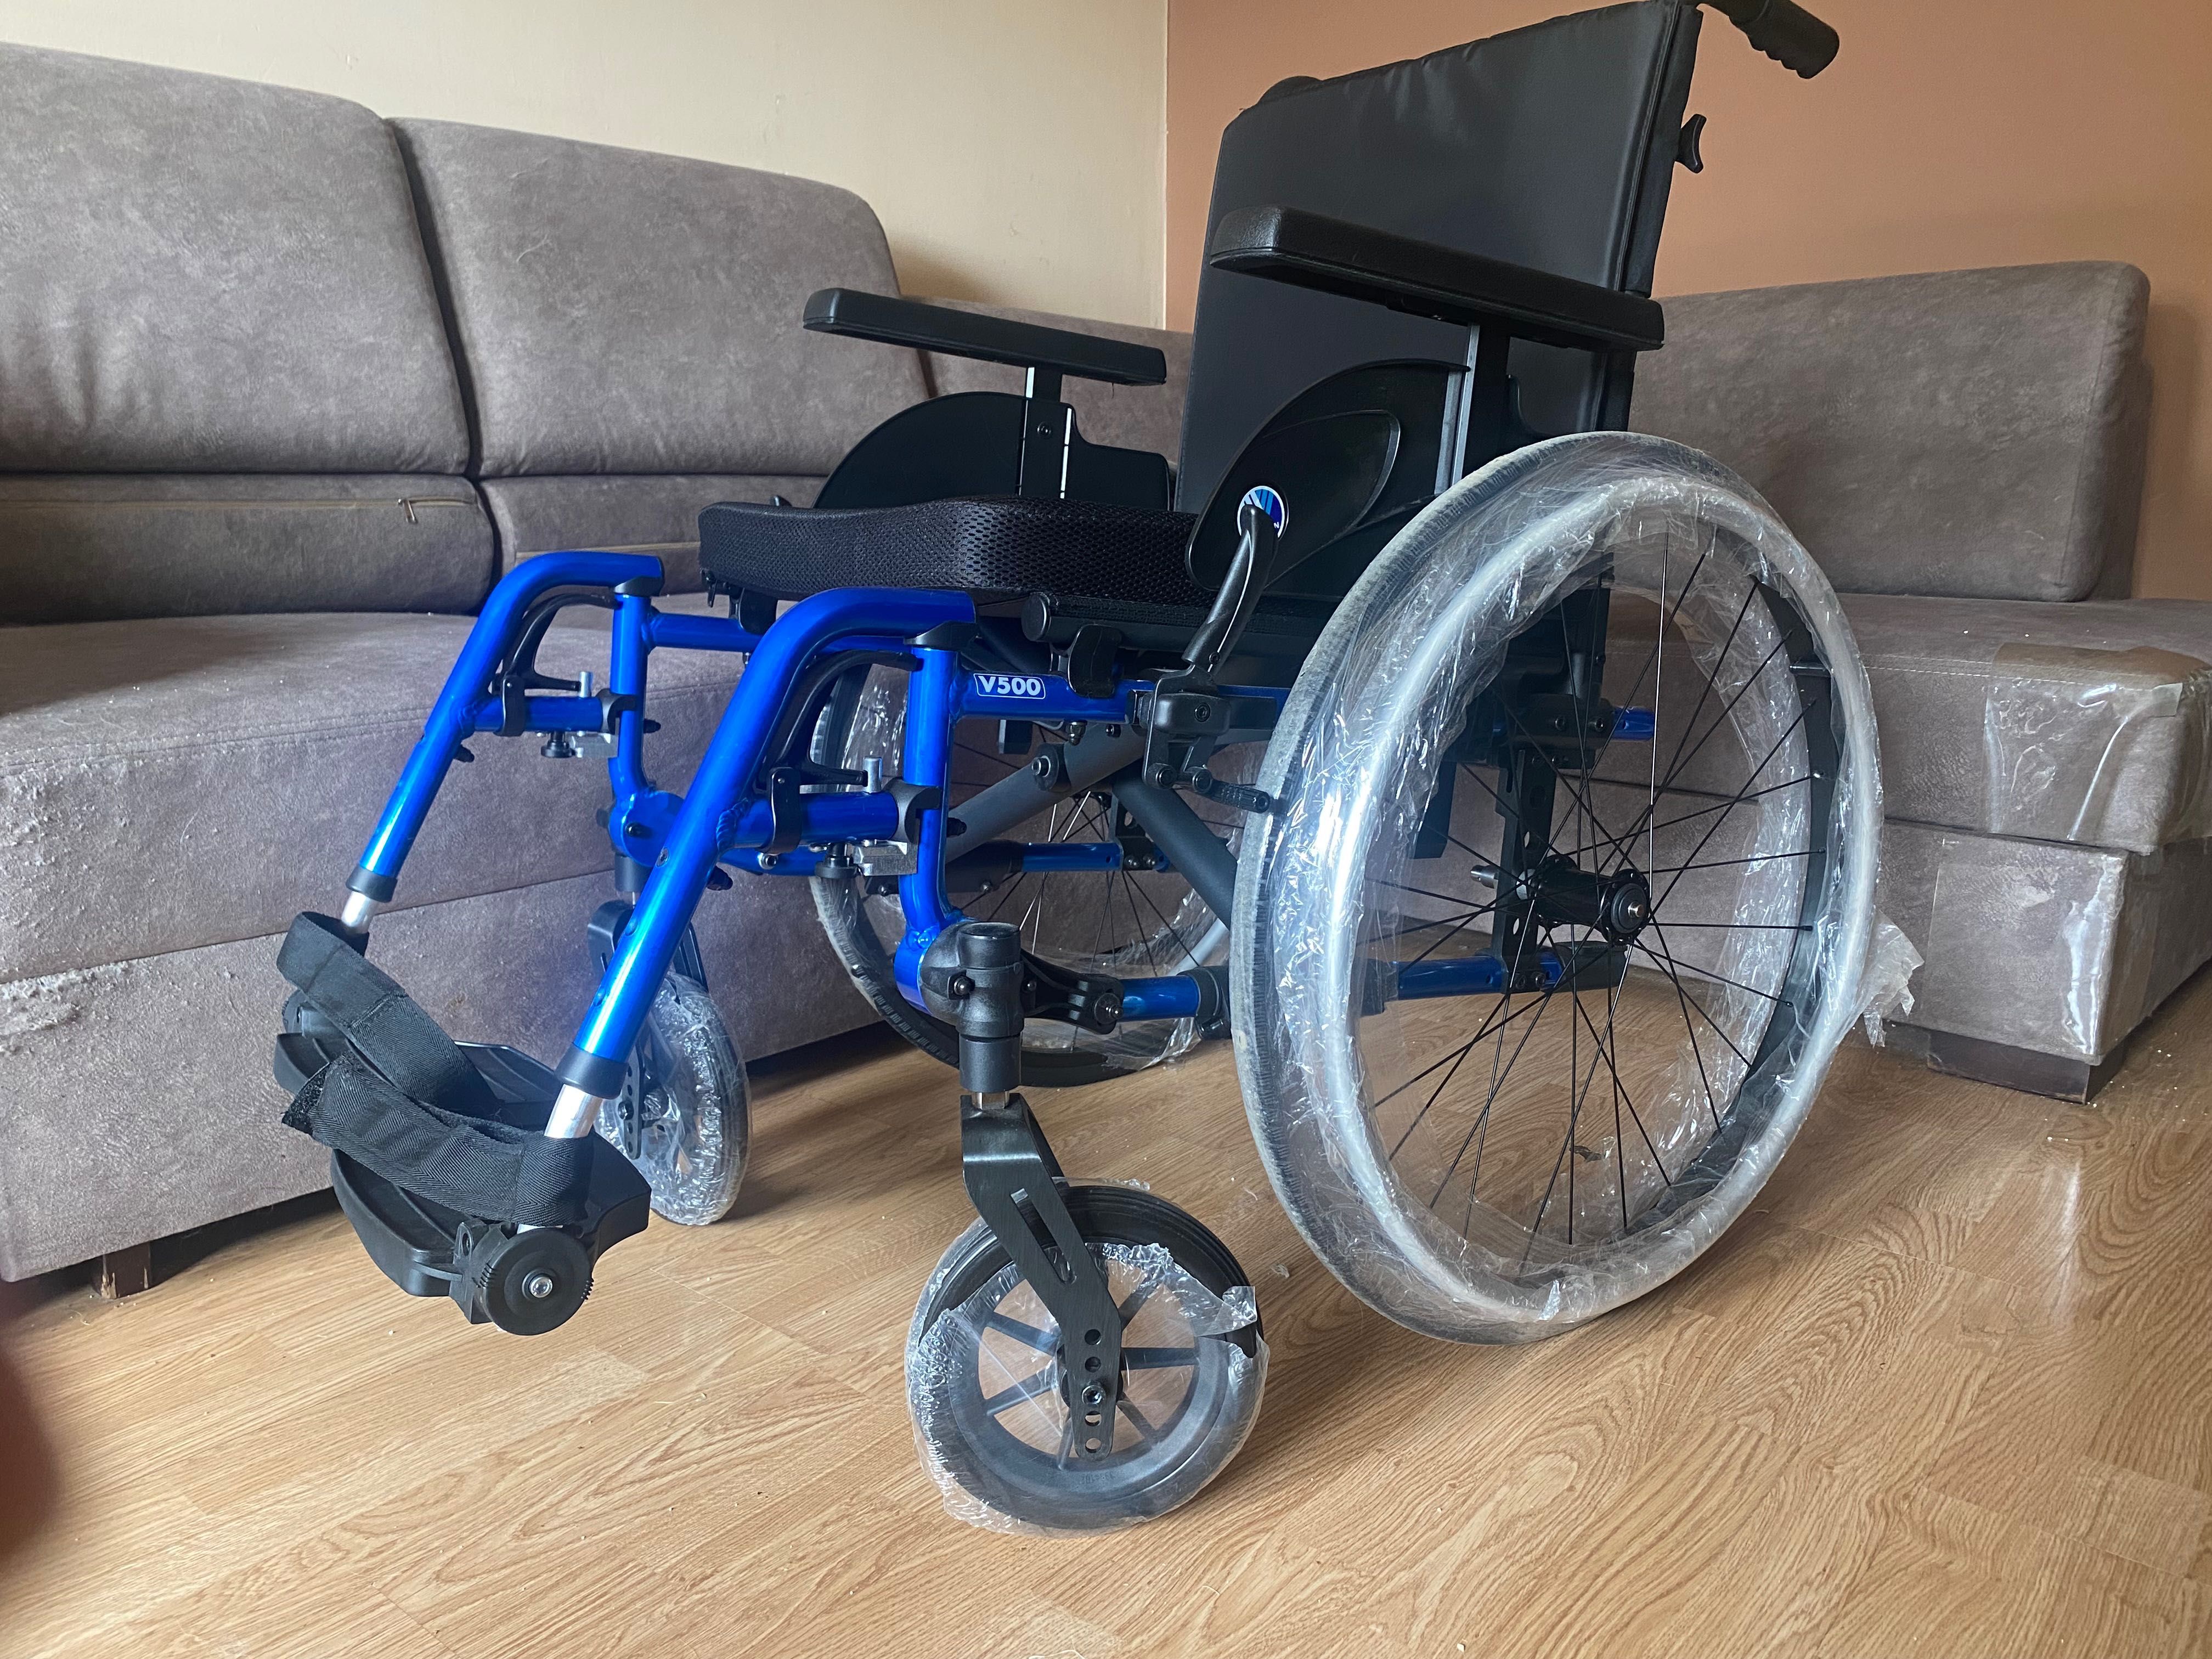 NOWY wózek inwalidzki V500 Light Vermeiren